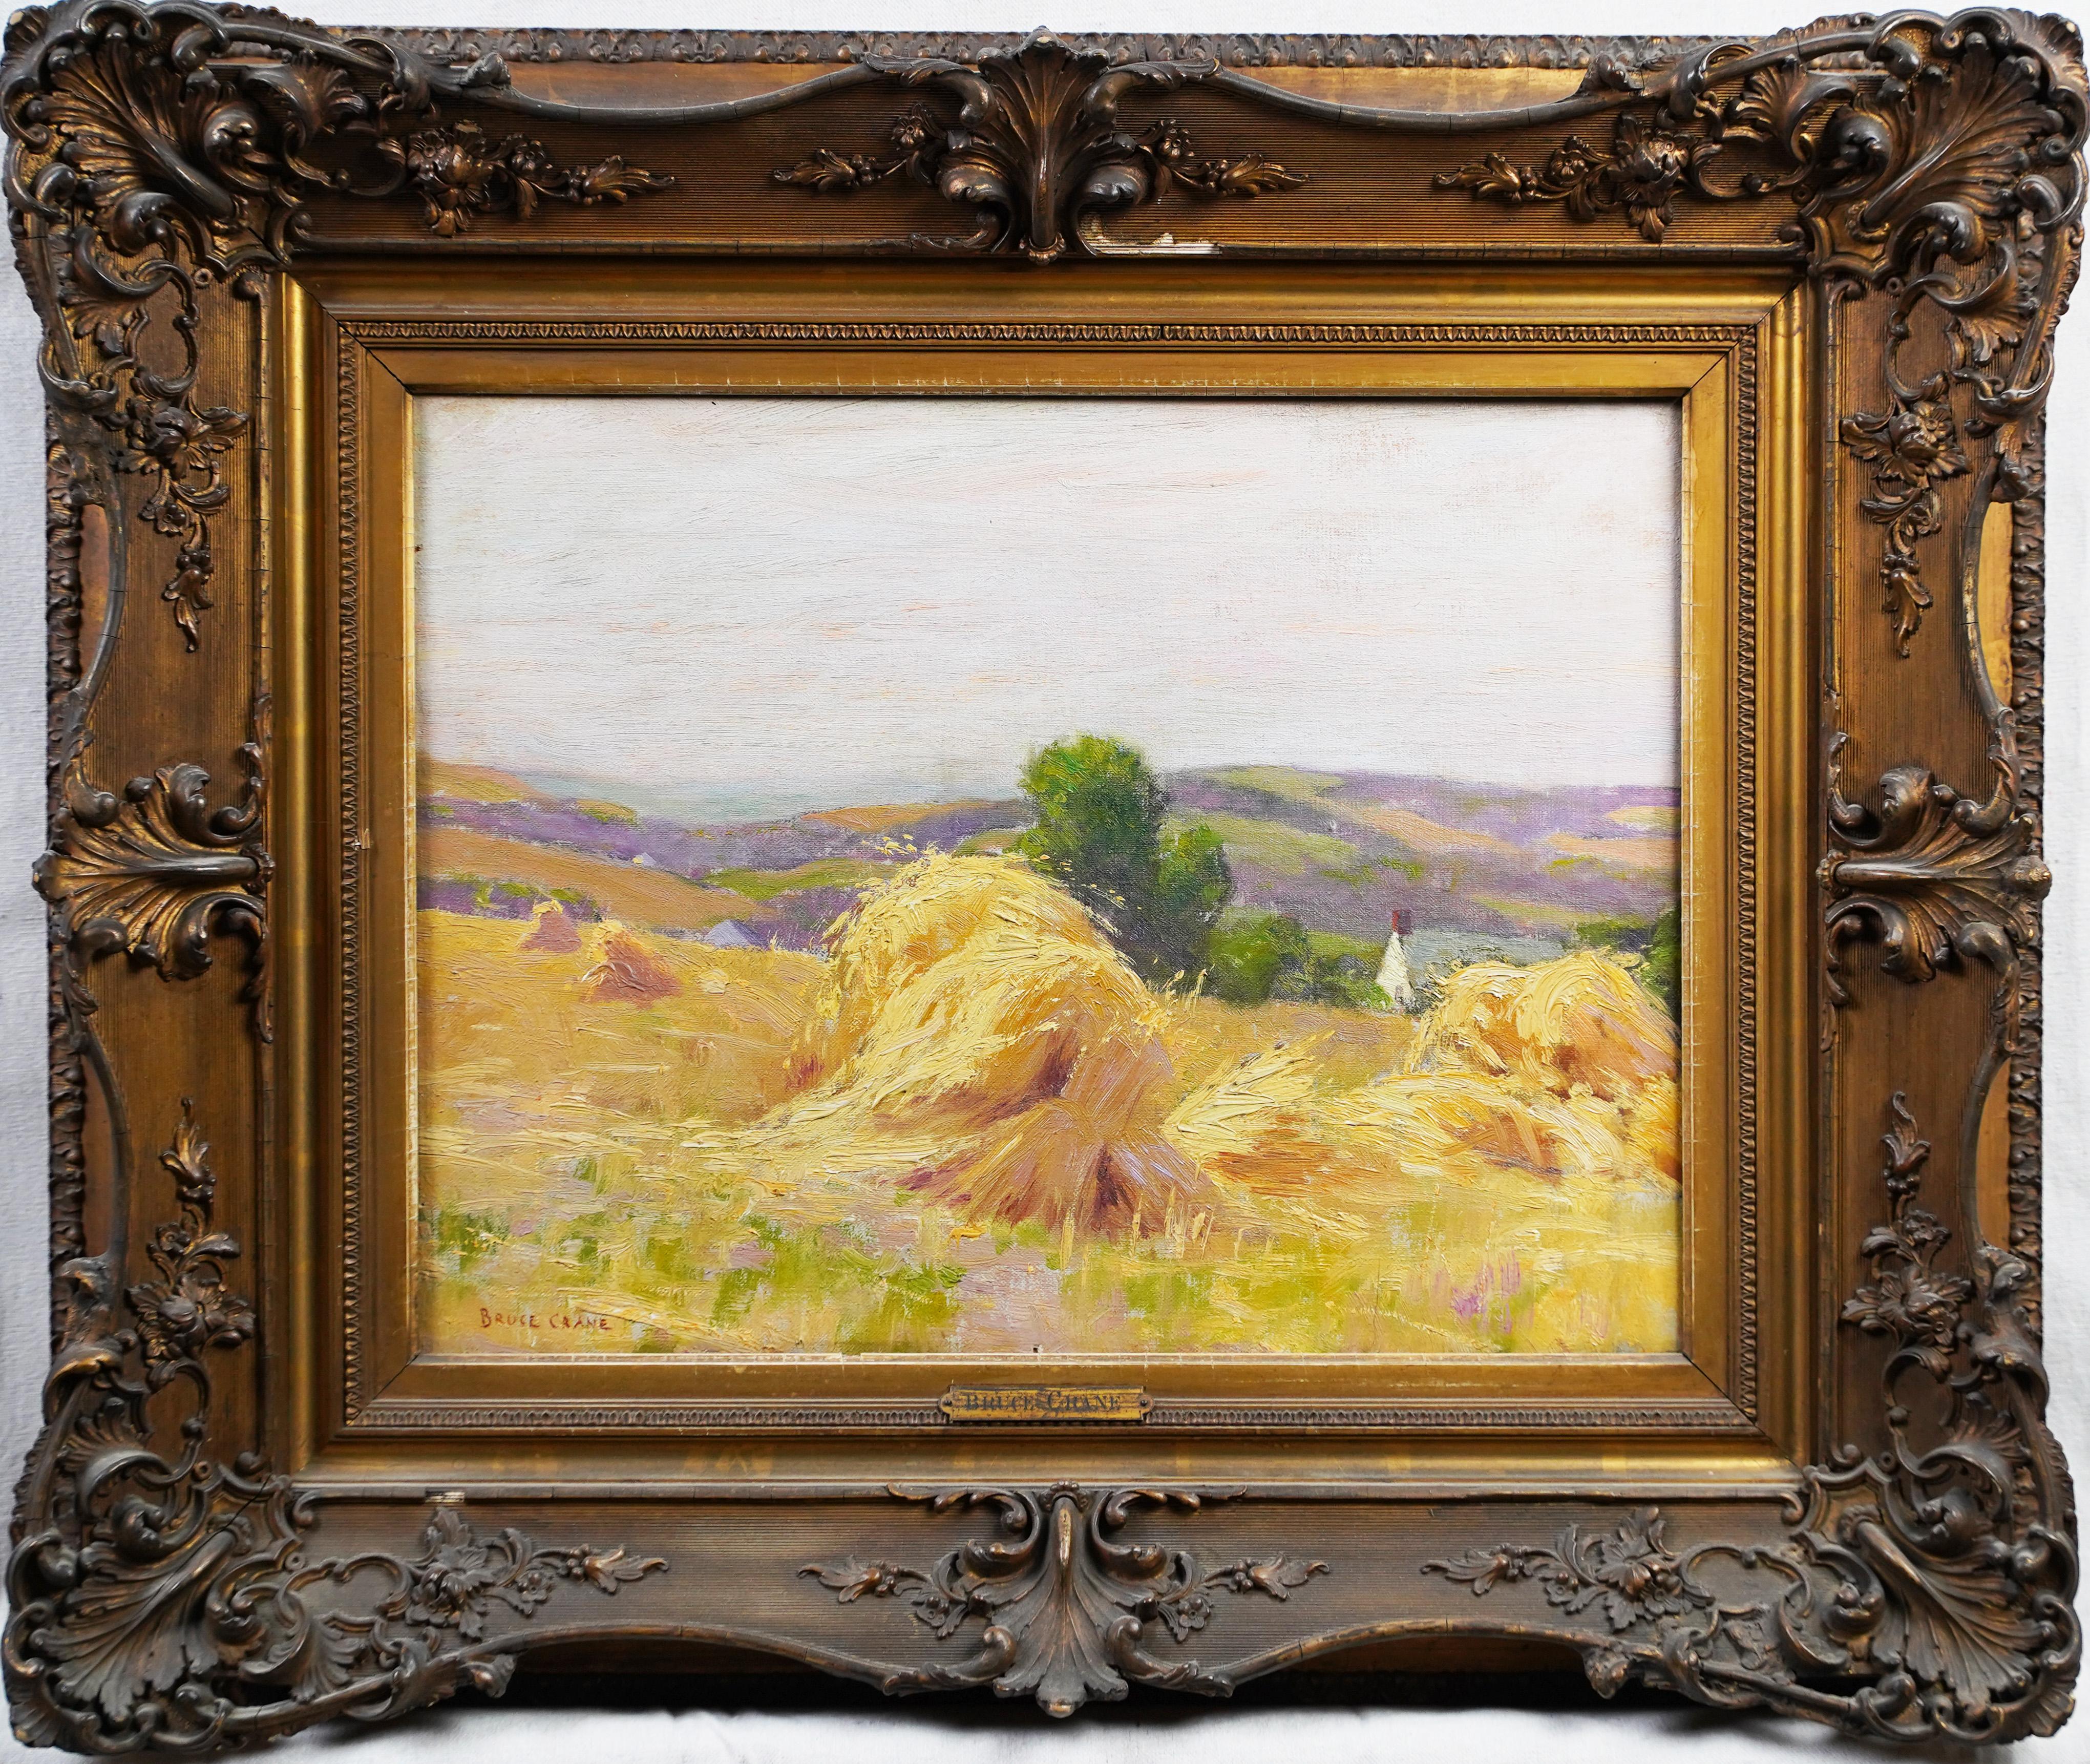 Antique American impressionist landscape framed oil painting by Bruce Crane (1857 - 1937) .  Oil on canvas.  Framed.  Signed.  